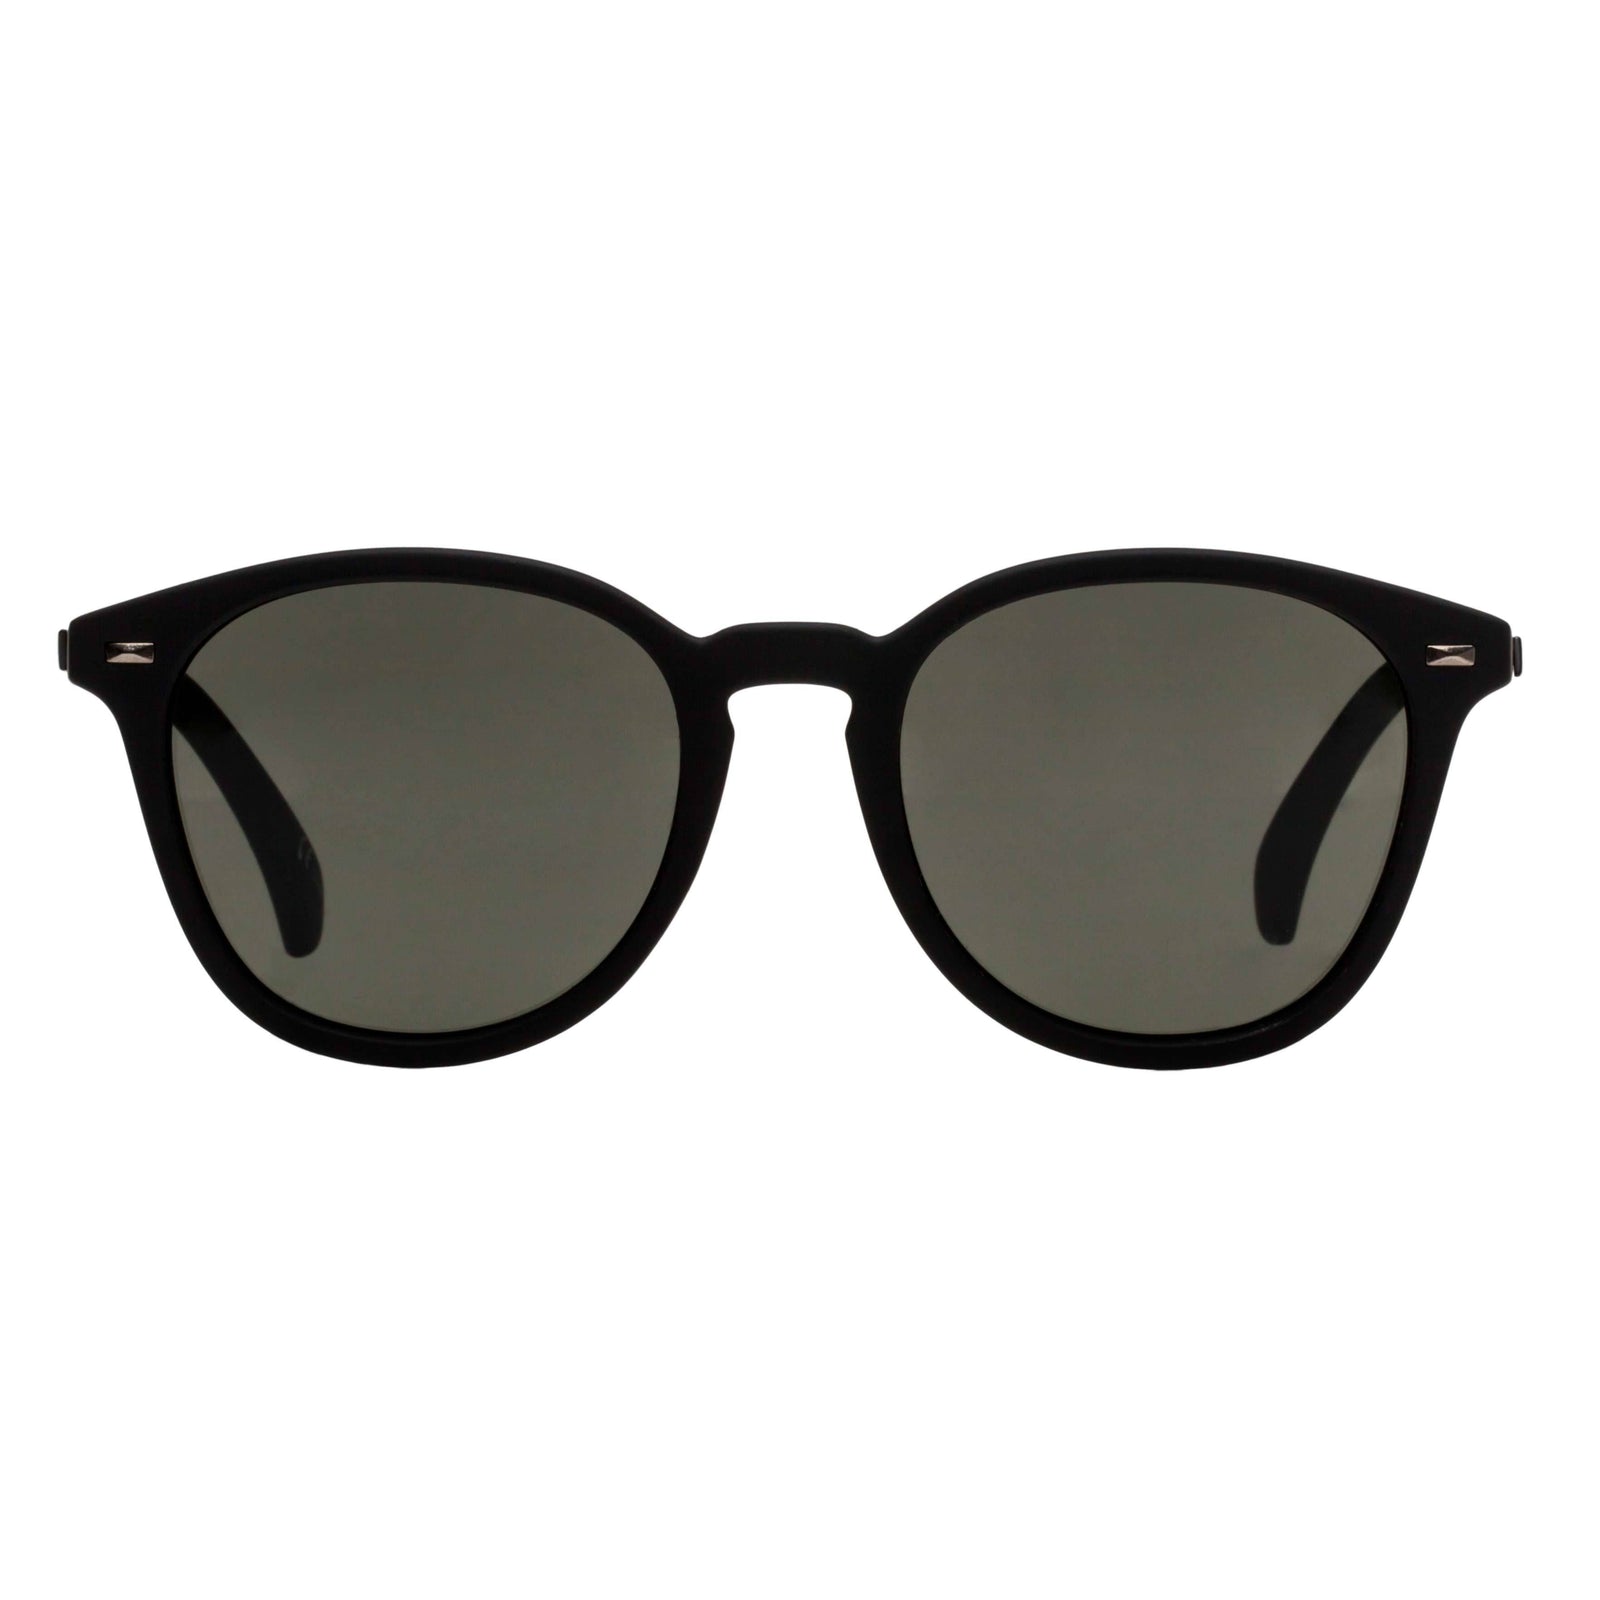 Specs Le | Sunglasses Tort Black Bandwagon Round Uni-Sex